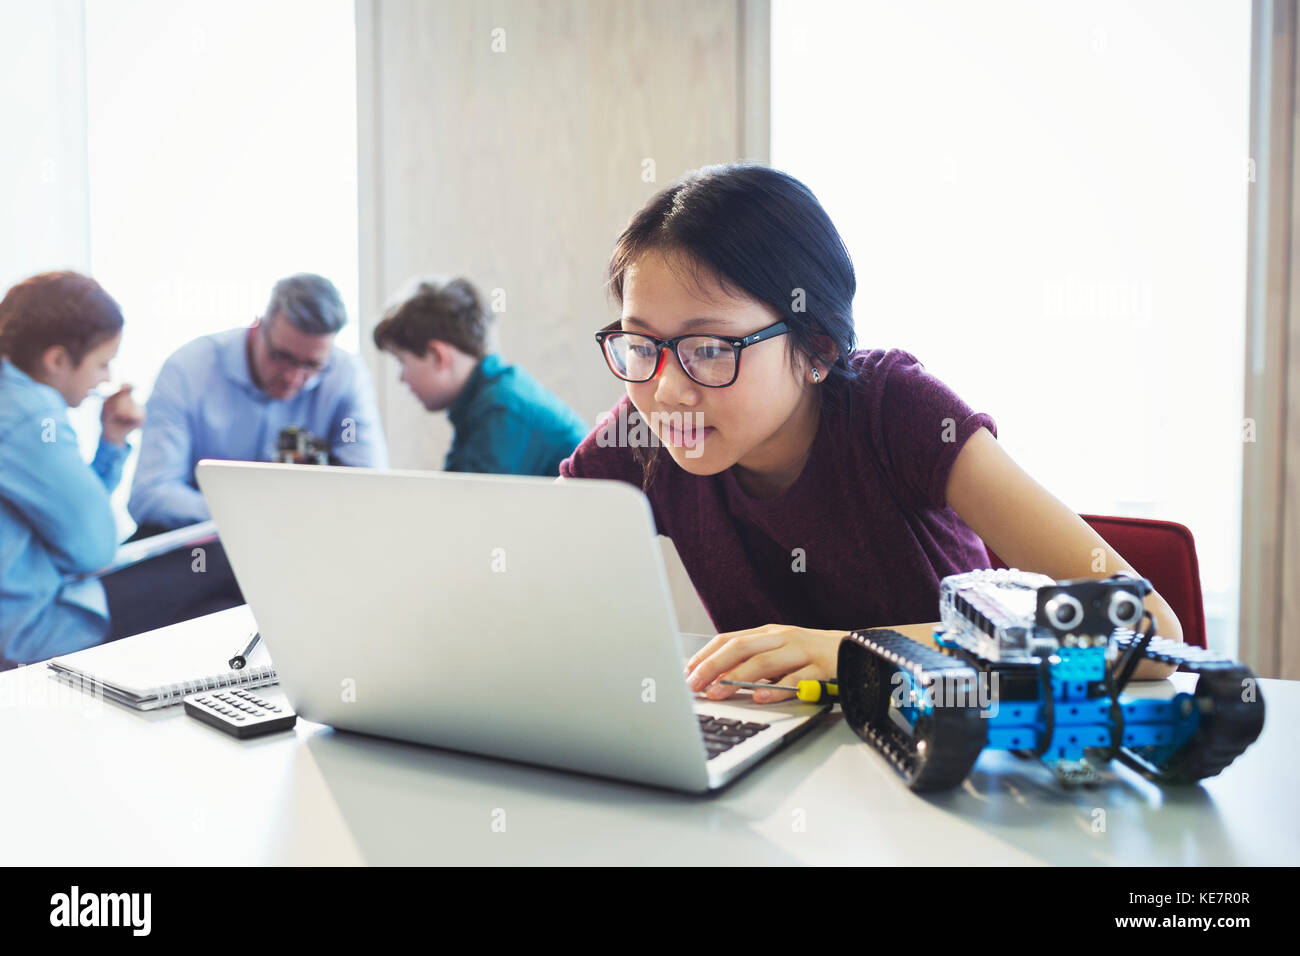 Focused girl student programming robotics at laptop in classroom Stock Photo